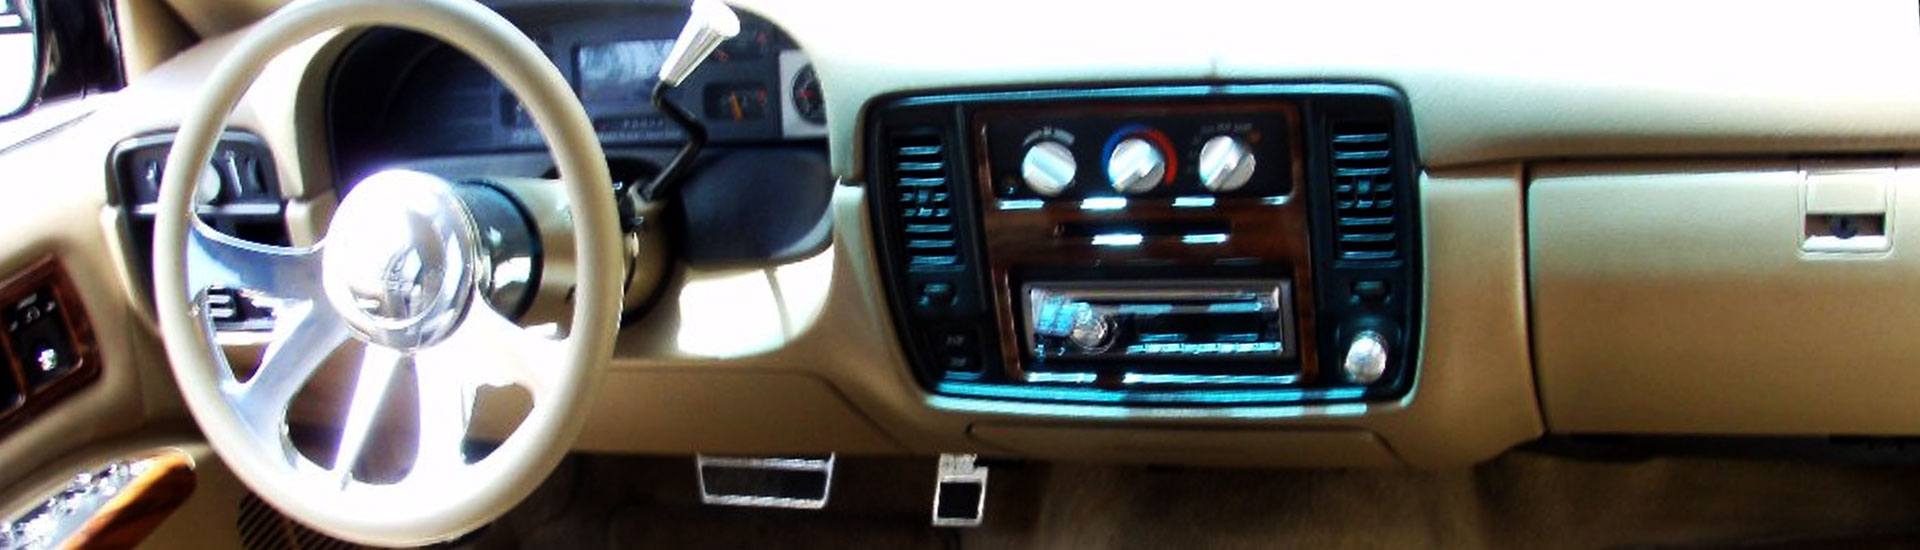 1994 Chevrolet Caprice Dash Kits